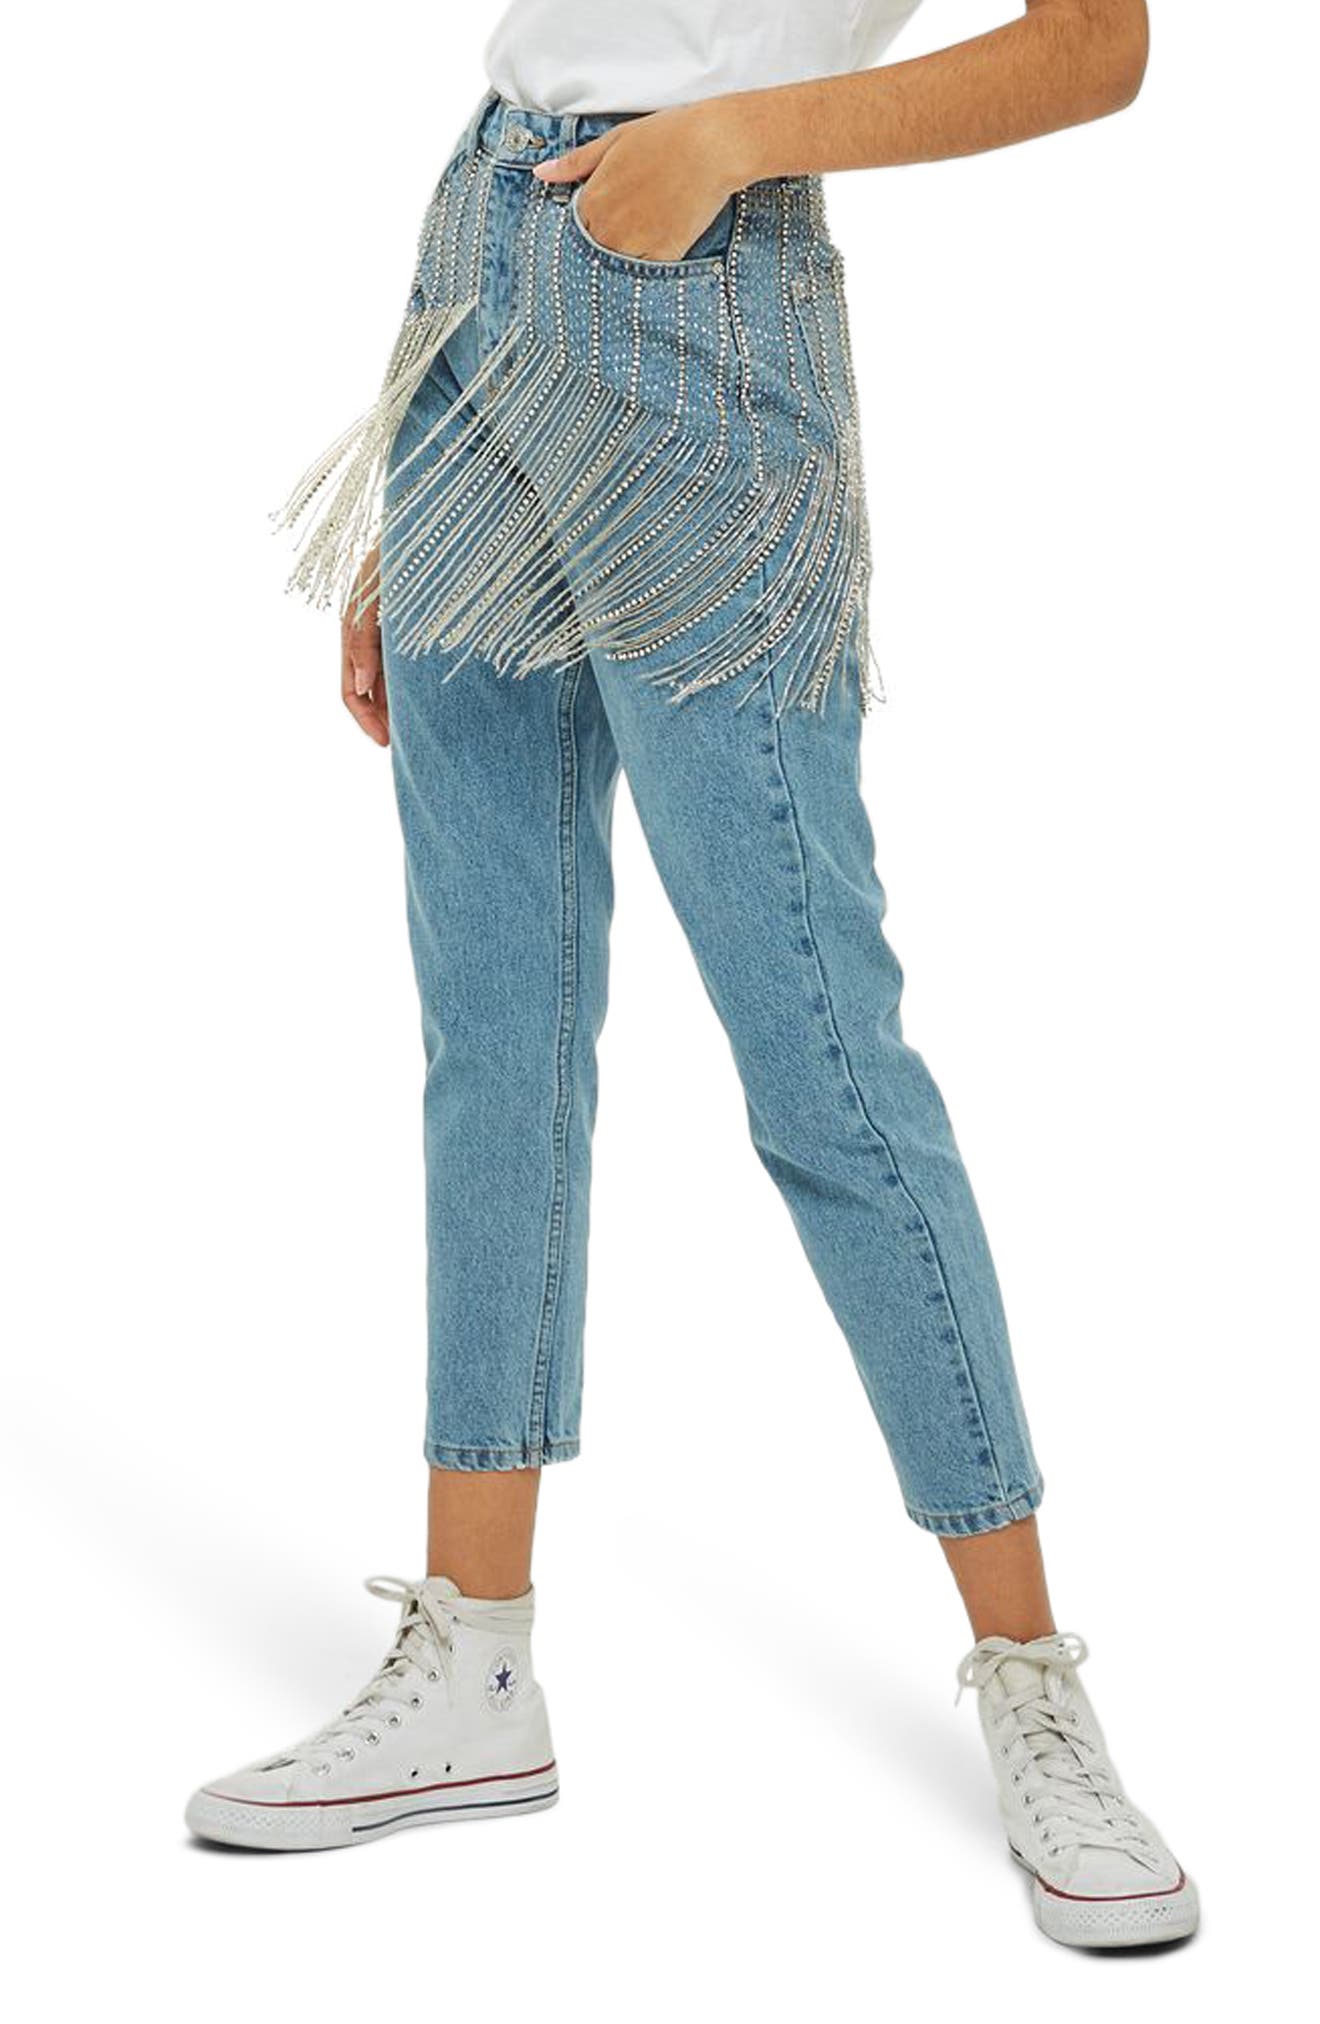 topshop rhinestone jeans